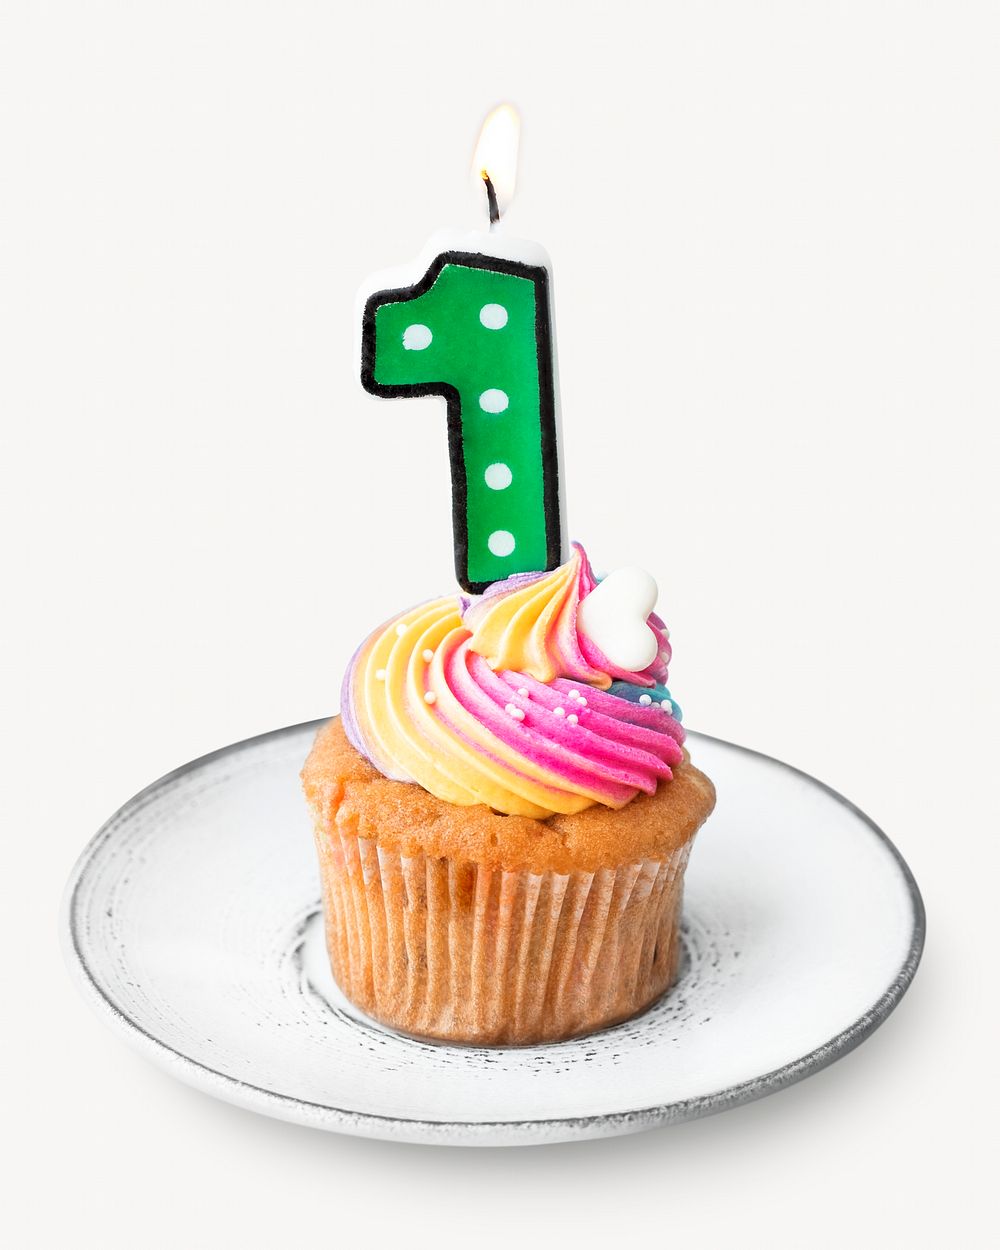 Birthday cupcake, celebration dessert isolated image